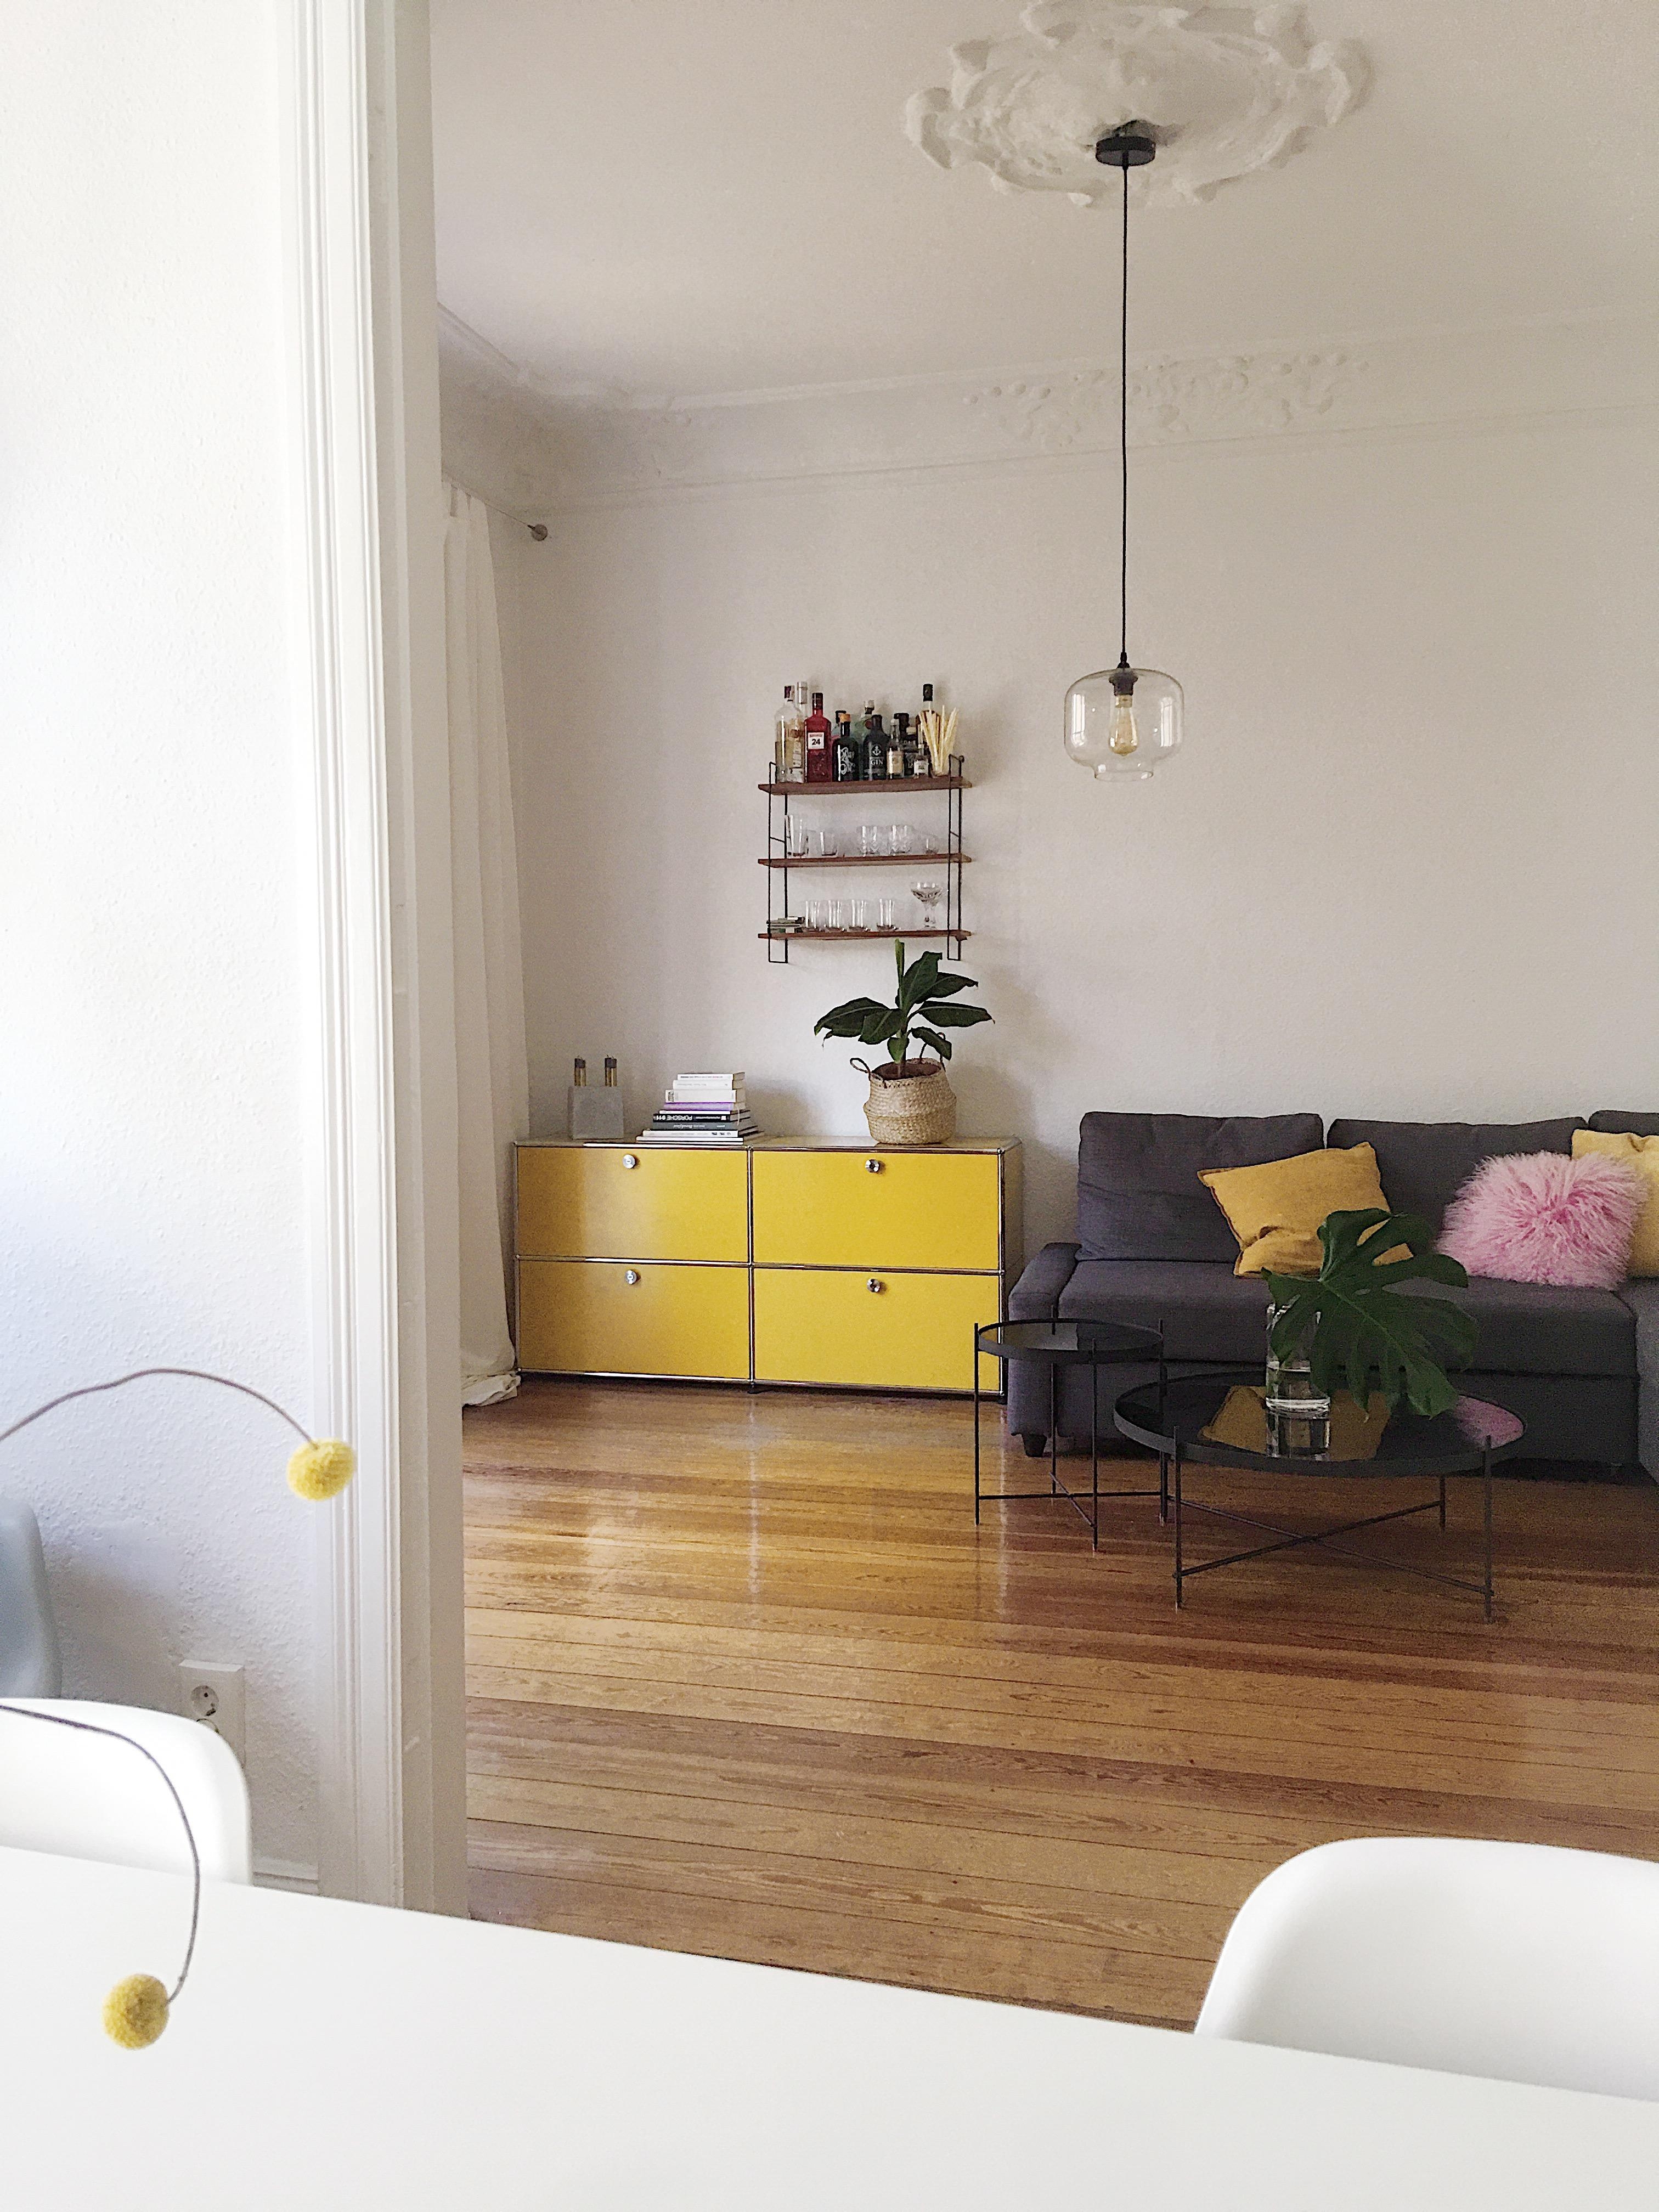 Lieblingsplatz 💛 #livingroom #altbauliebe #usm #colorful #yellowmania #interiorinspo #ikea 